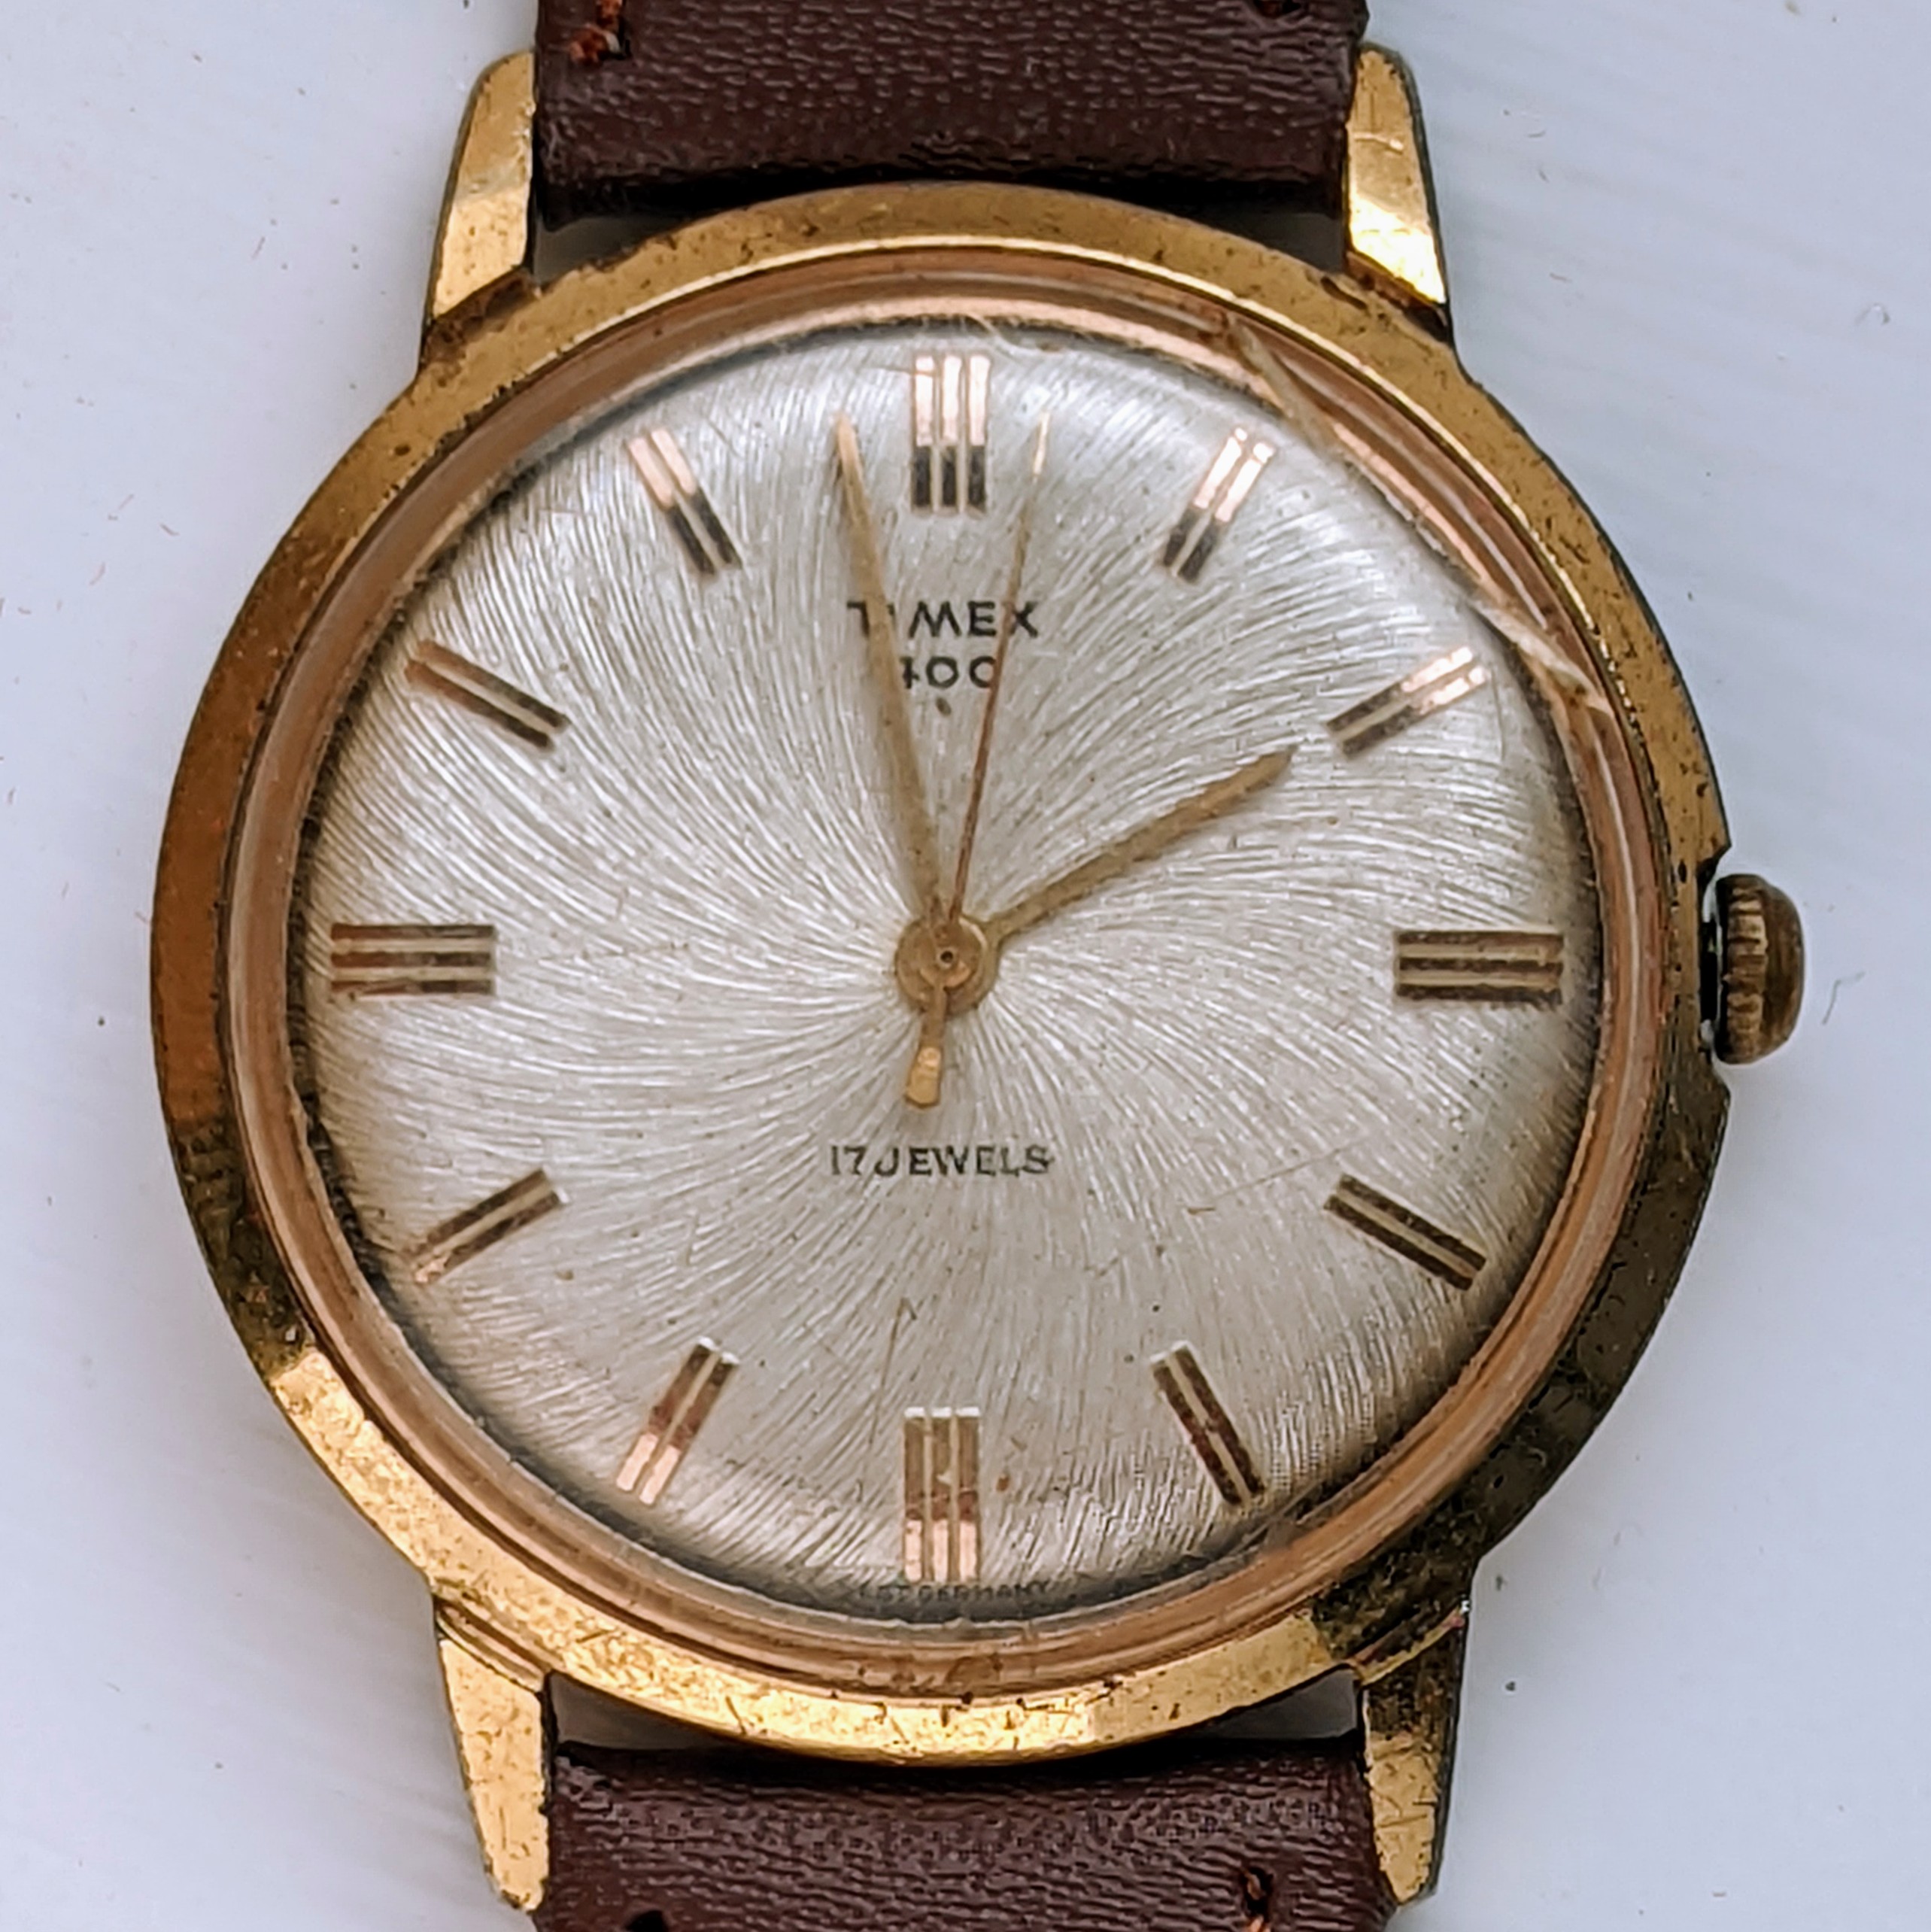 Timex 400 6064 7060 [1960]